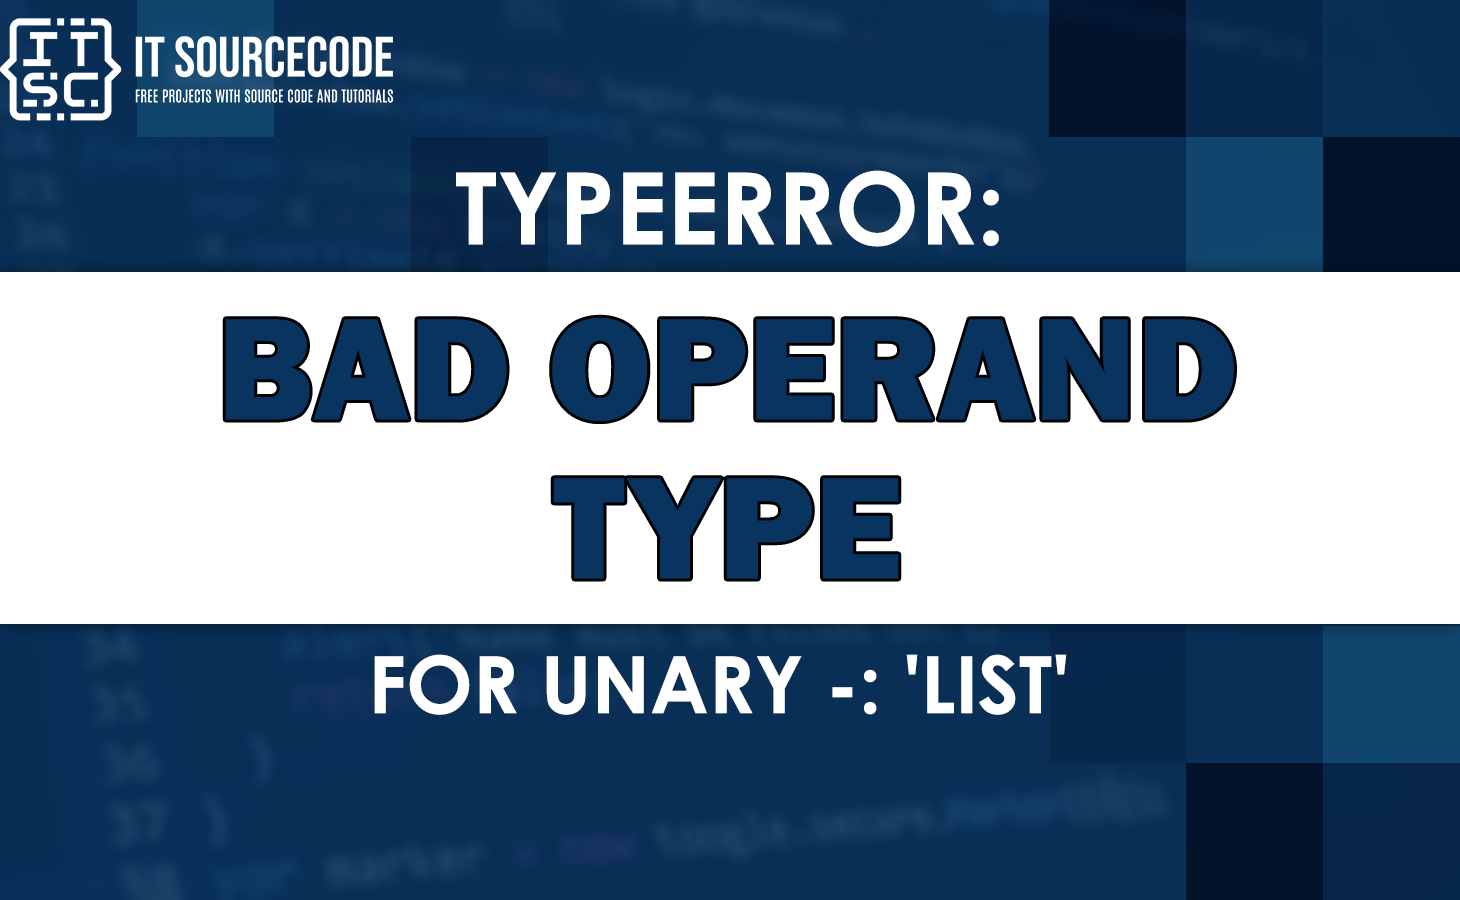 Typeerror: bad operand type for unary -: 'list'